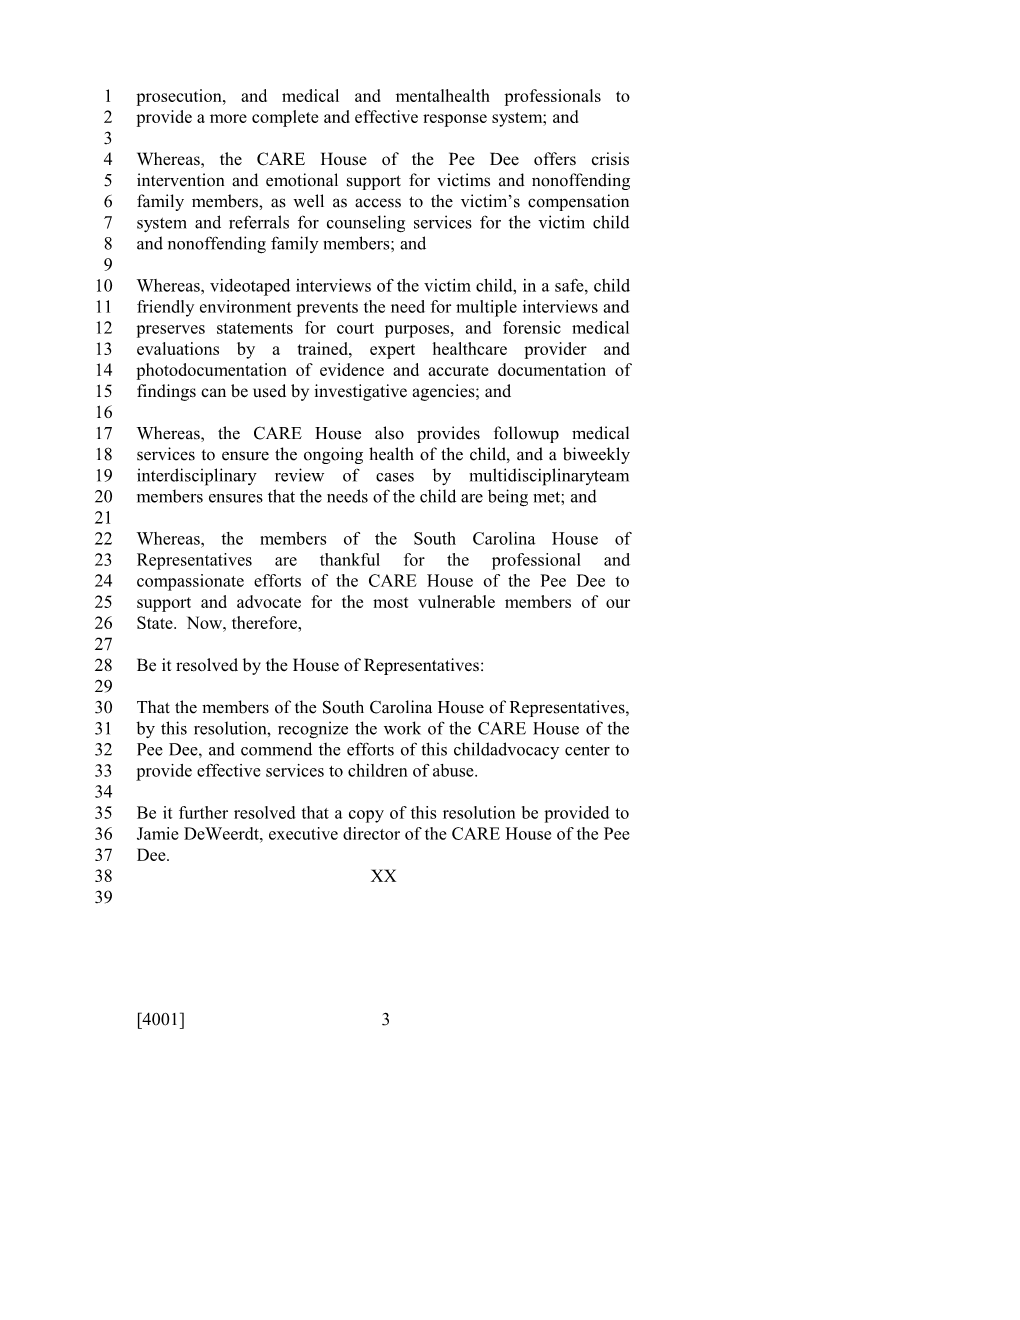 2011-2012 Bill 4001: Care House of the Pee Dee - South Carolina Legislature Online